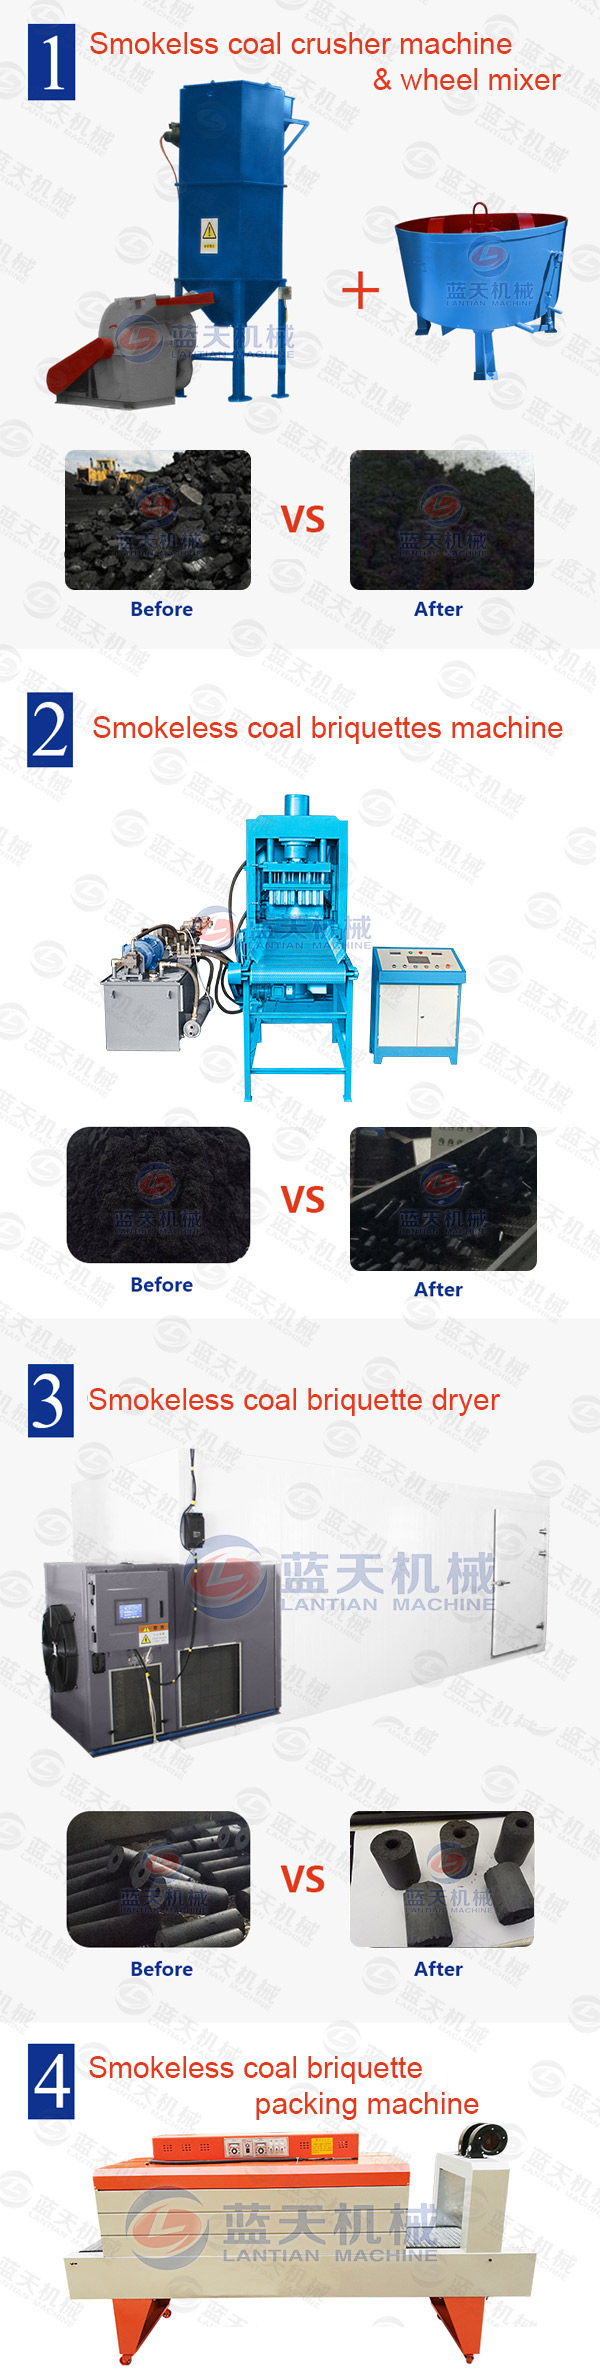 Smokeless Coal Briquettes Machine